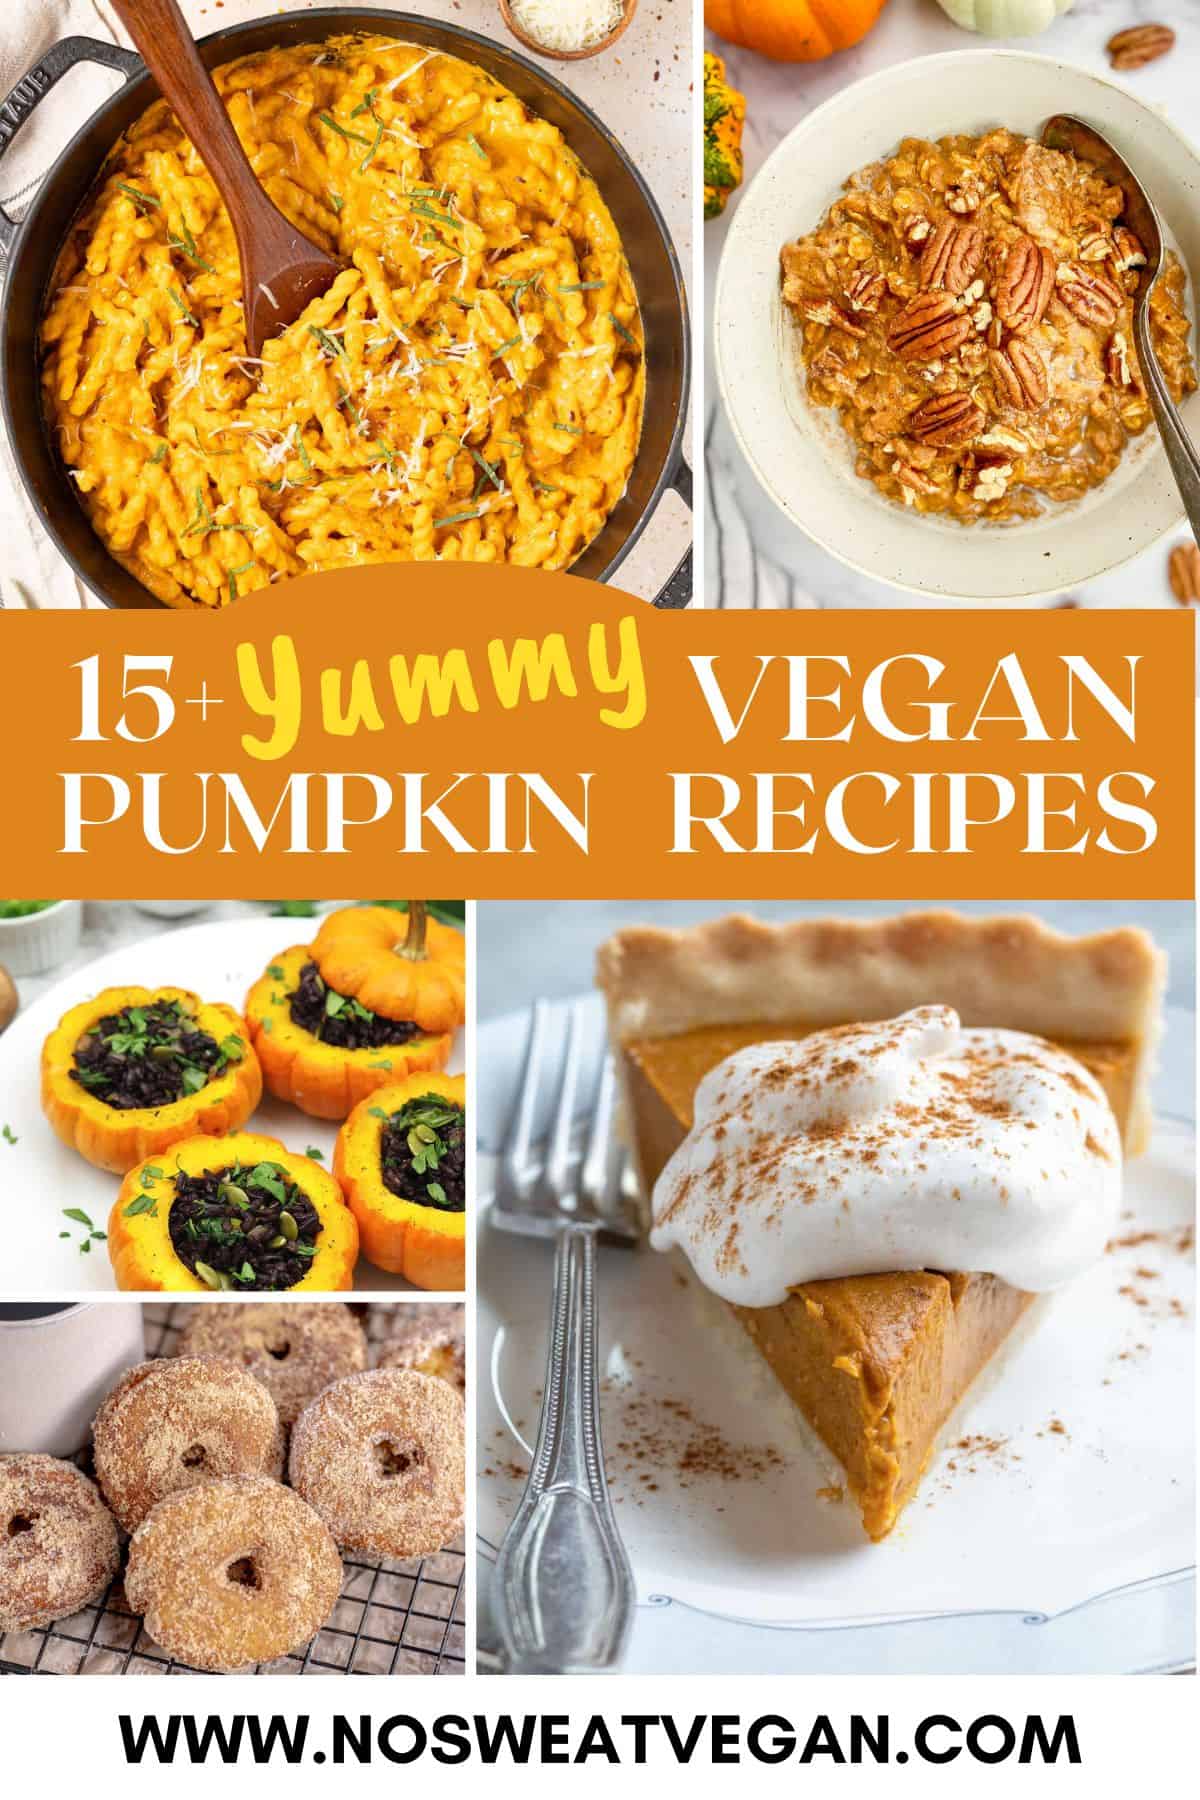 Pumpkin recipes vegan pin.